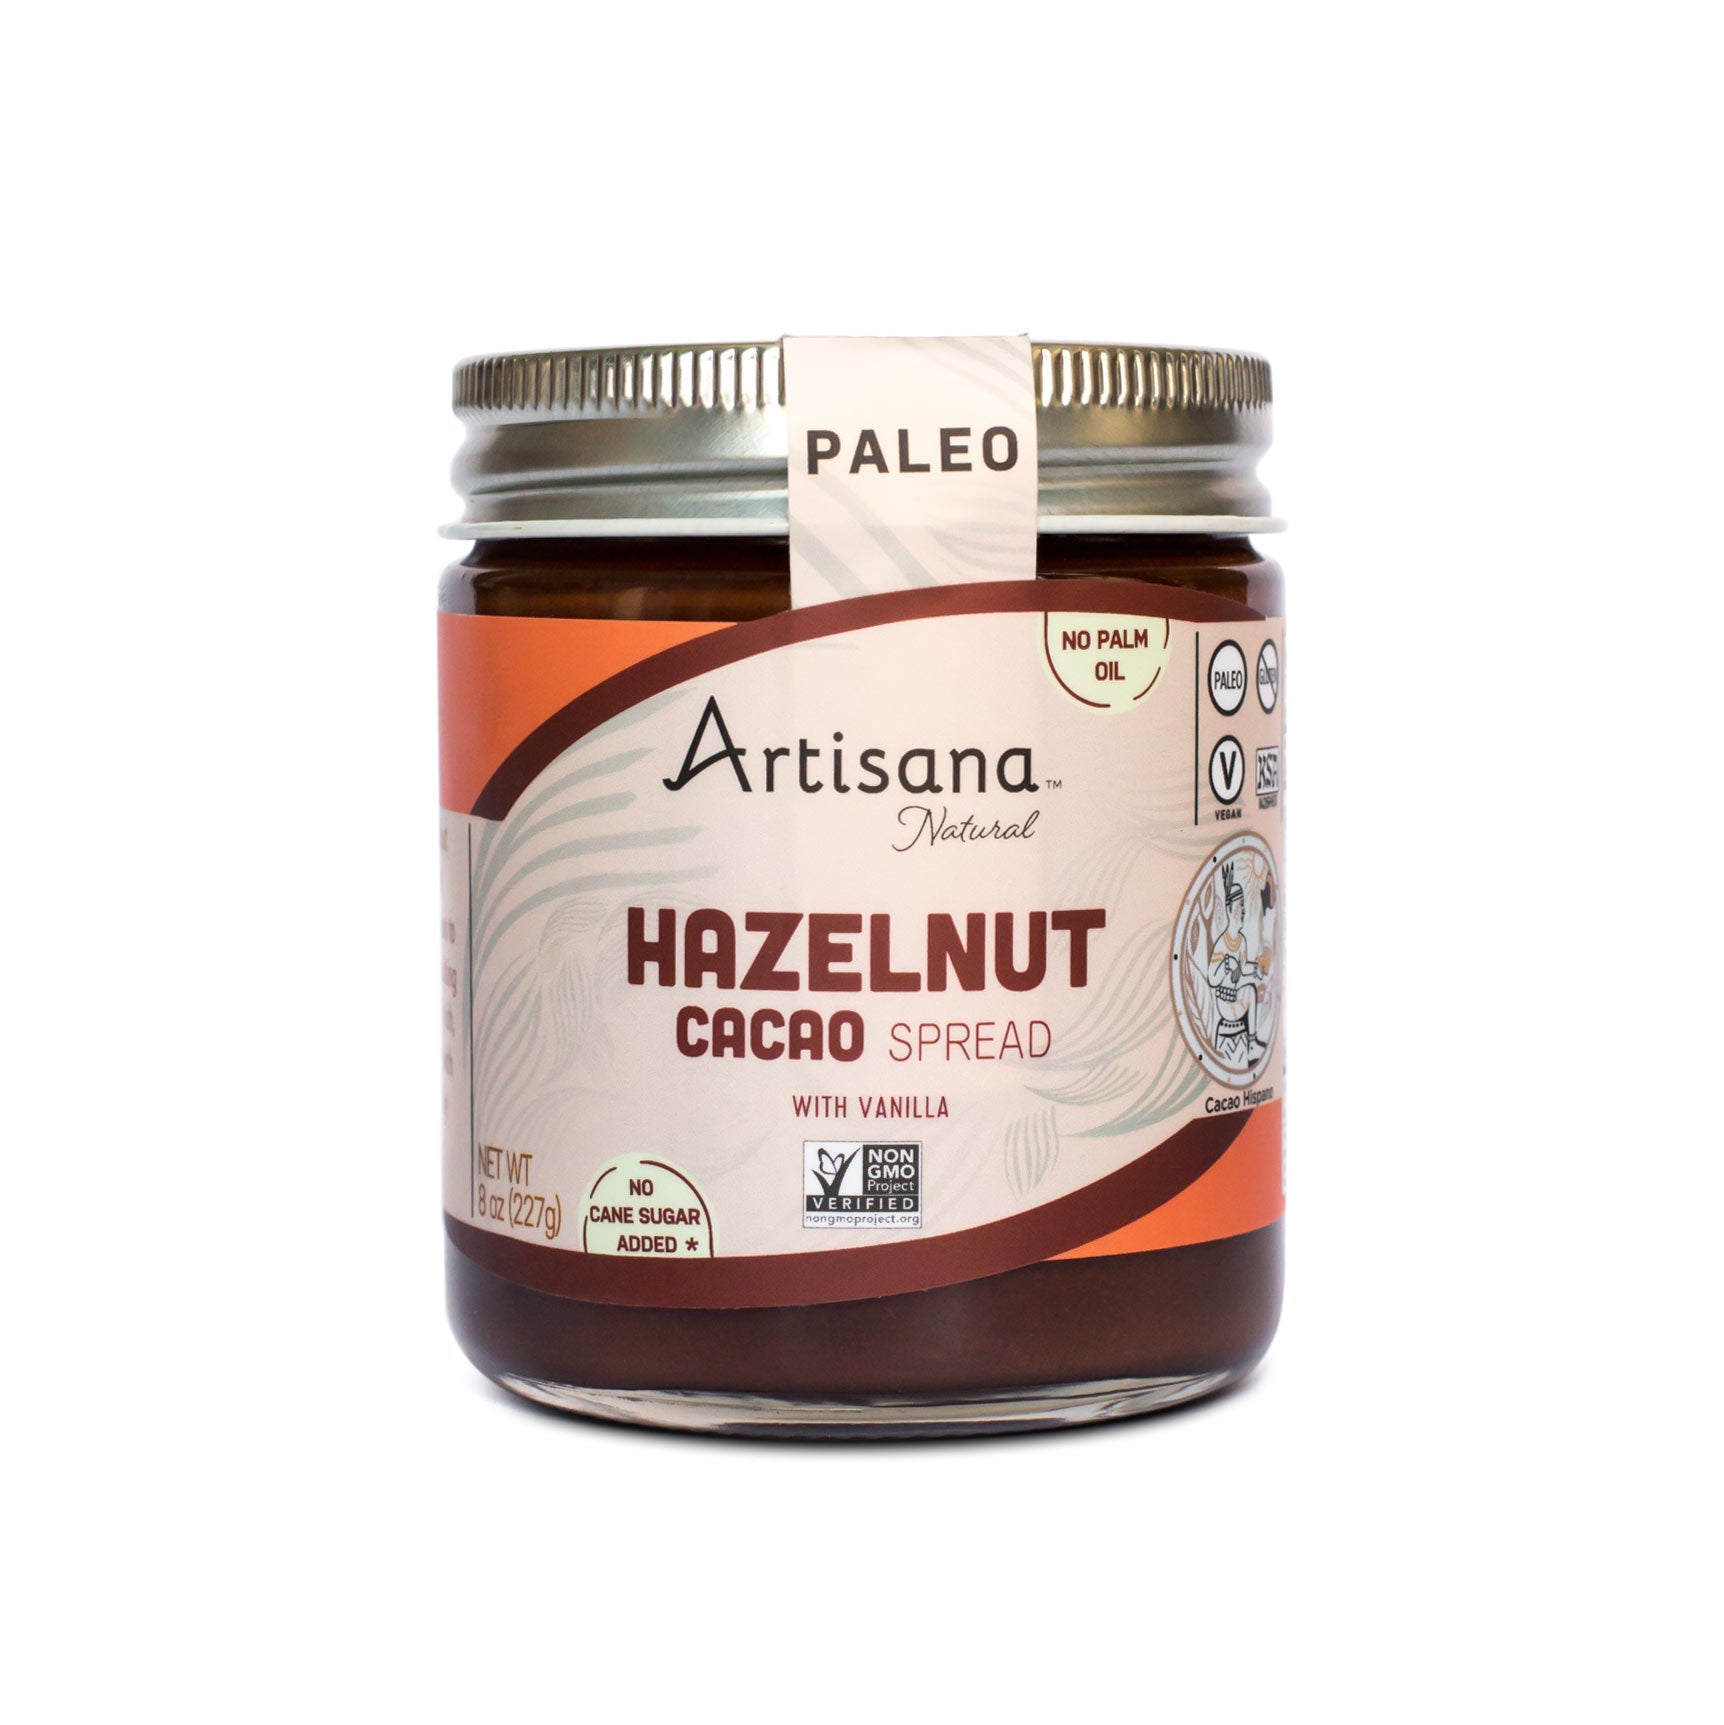 Hazelnut Cacao Spread with Vanilla